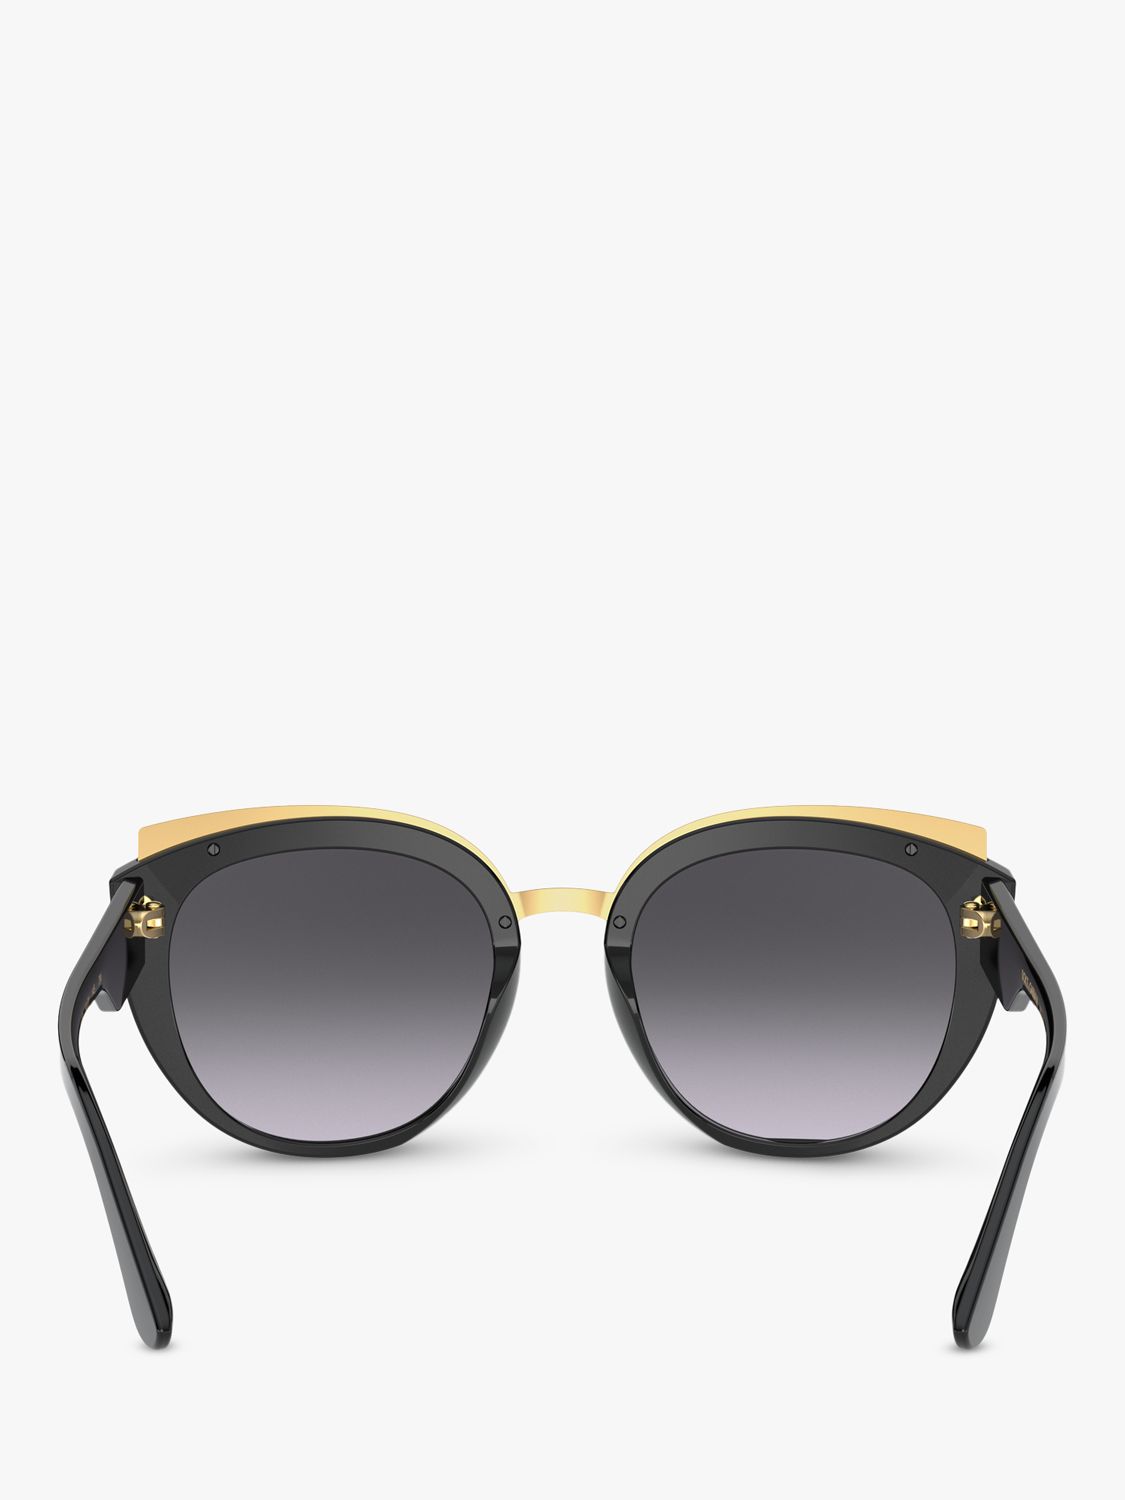 Dolce & Gabbana DG4383 Women's Butterfly Sunglasses, Black/Grey Gradient